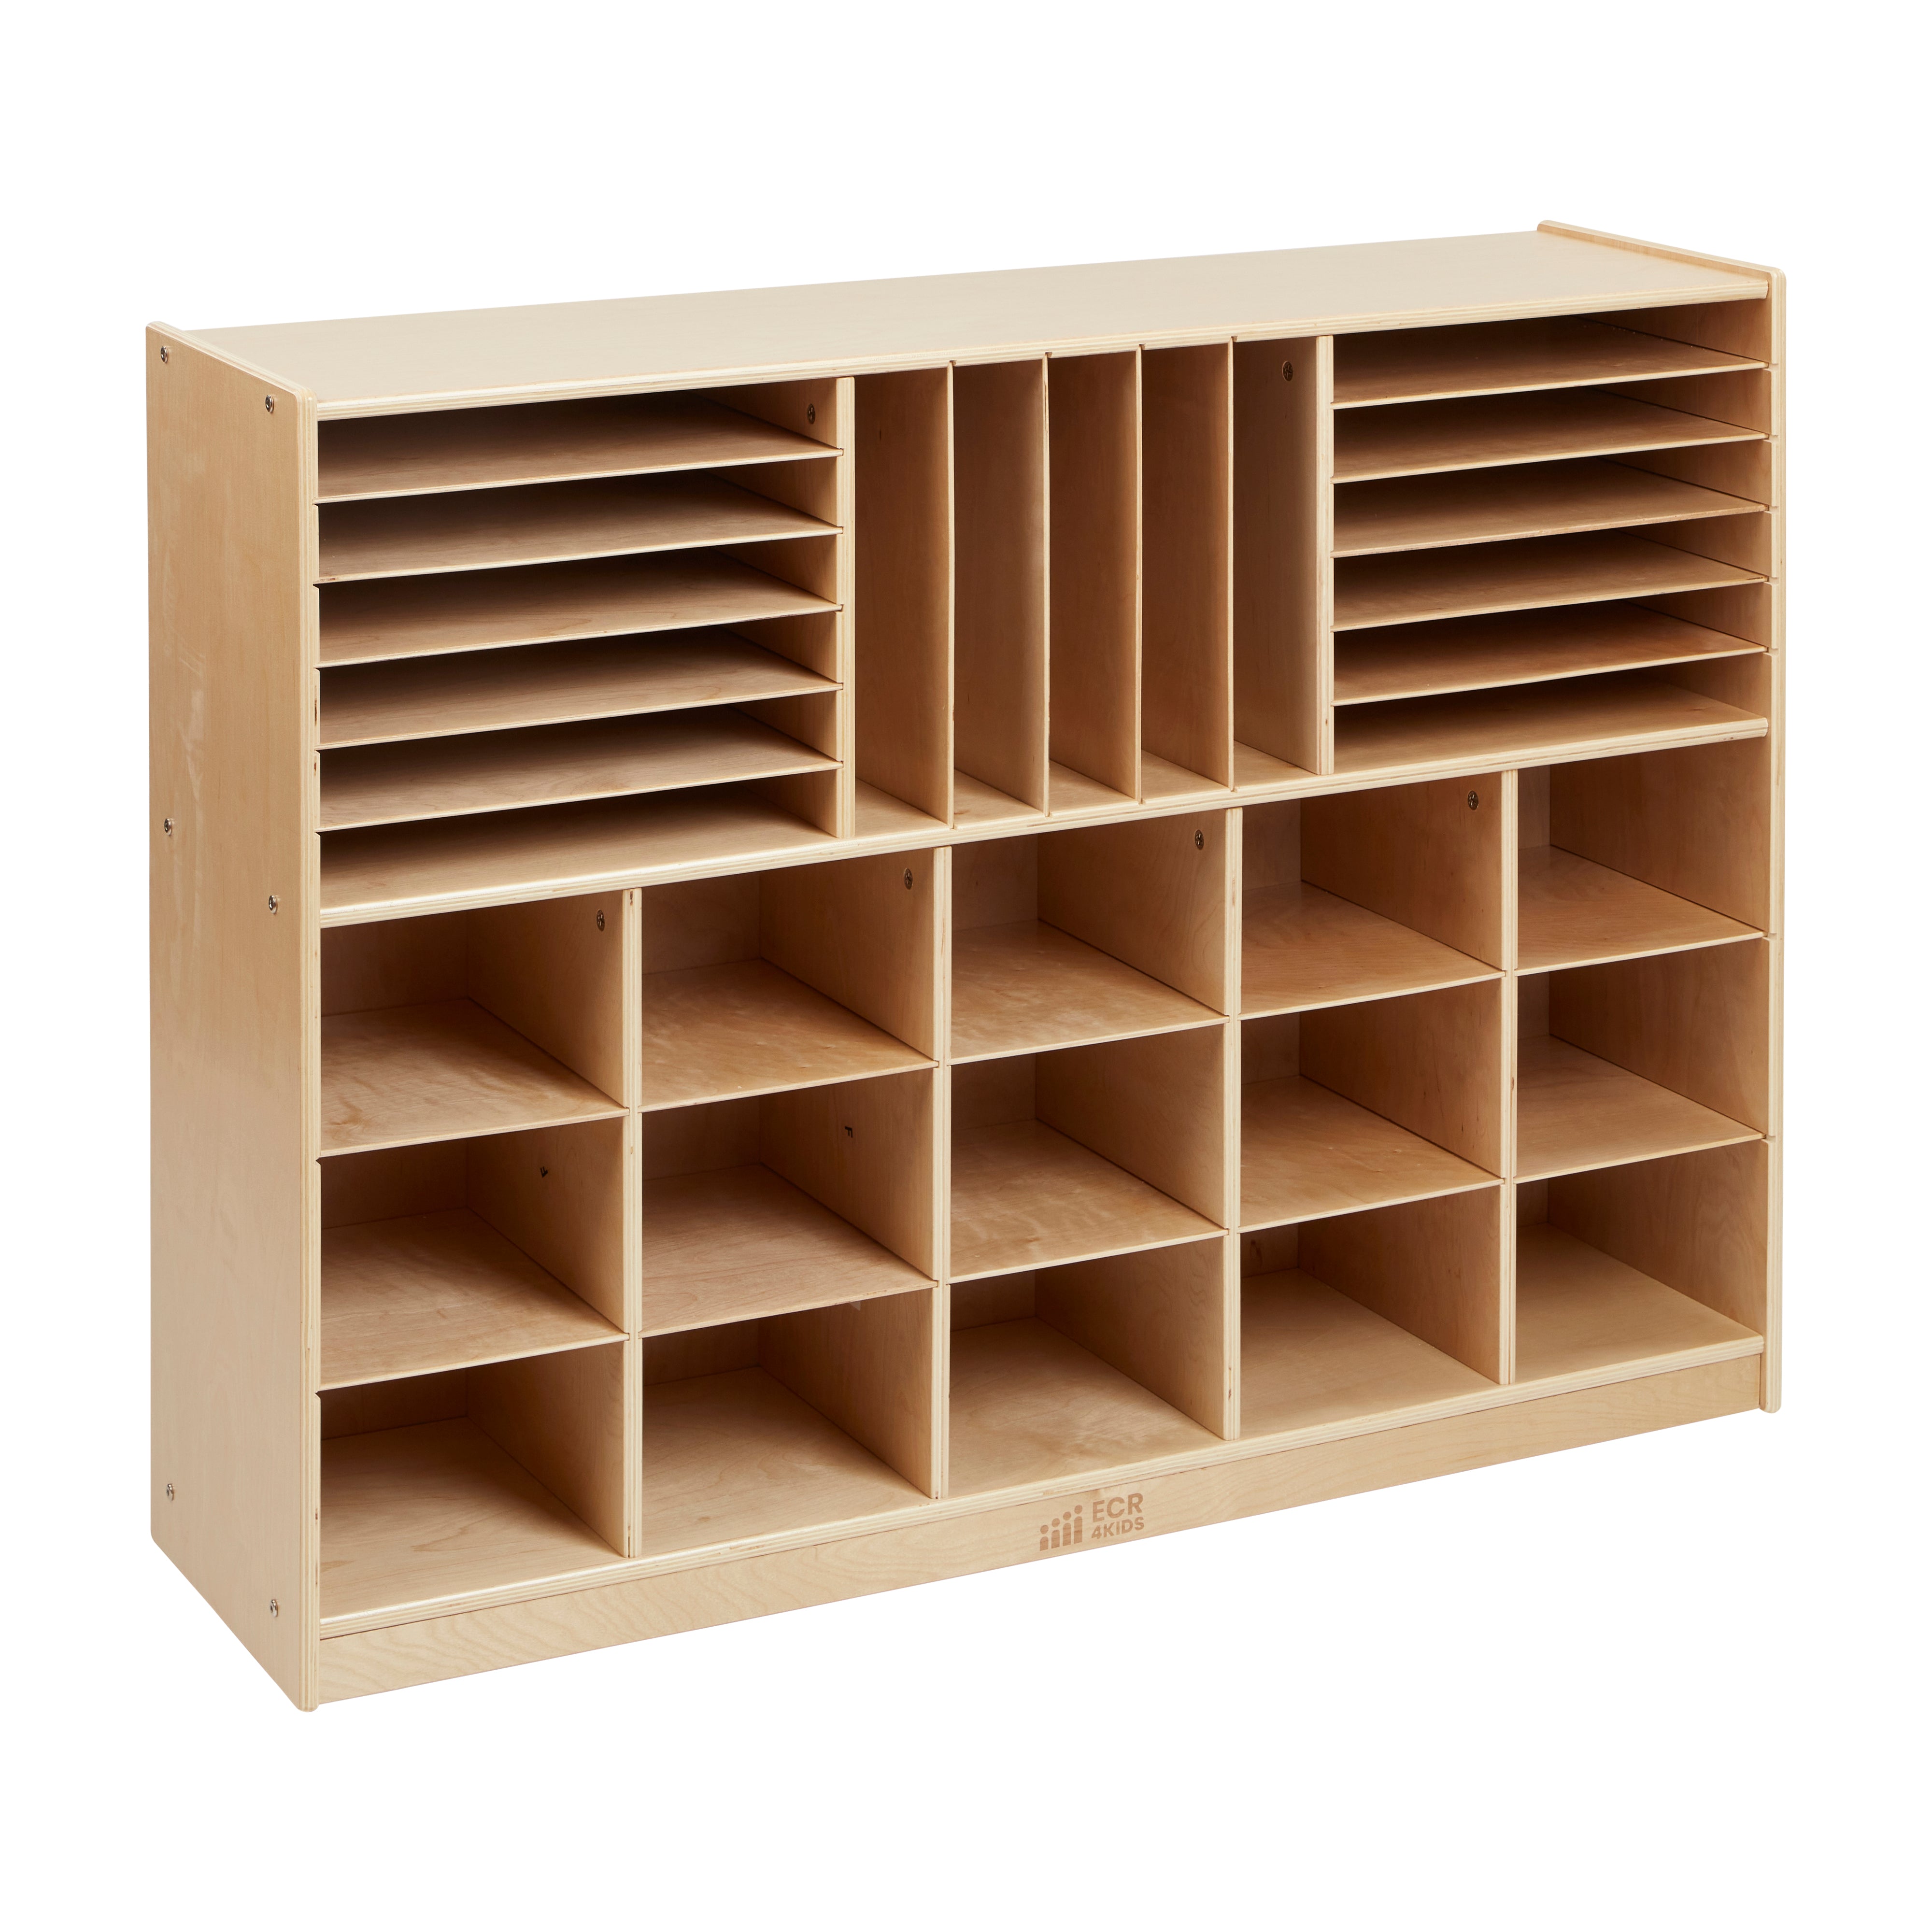 Modular Classroom Storage Cabinet - Single module with 3 large